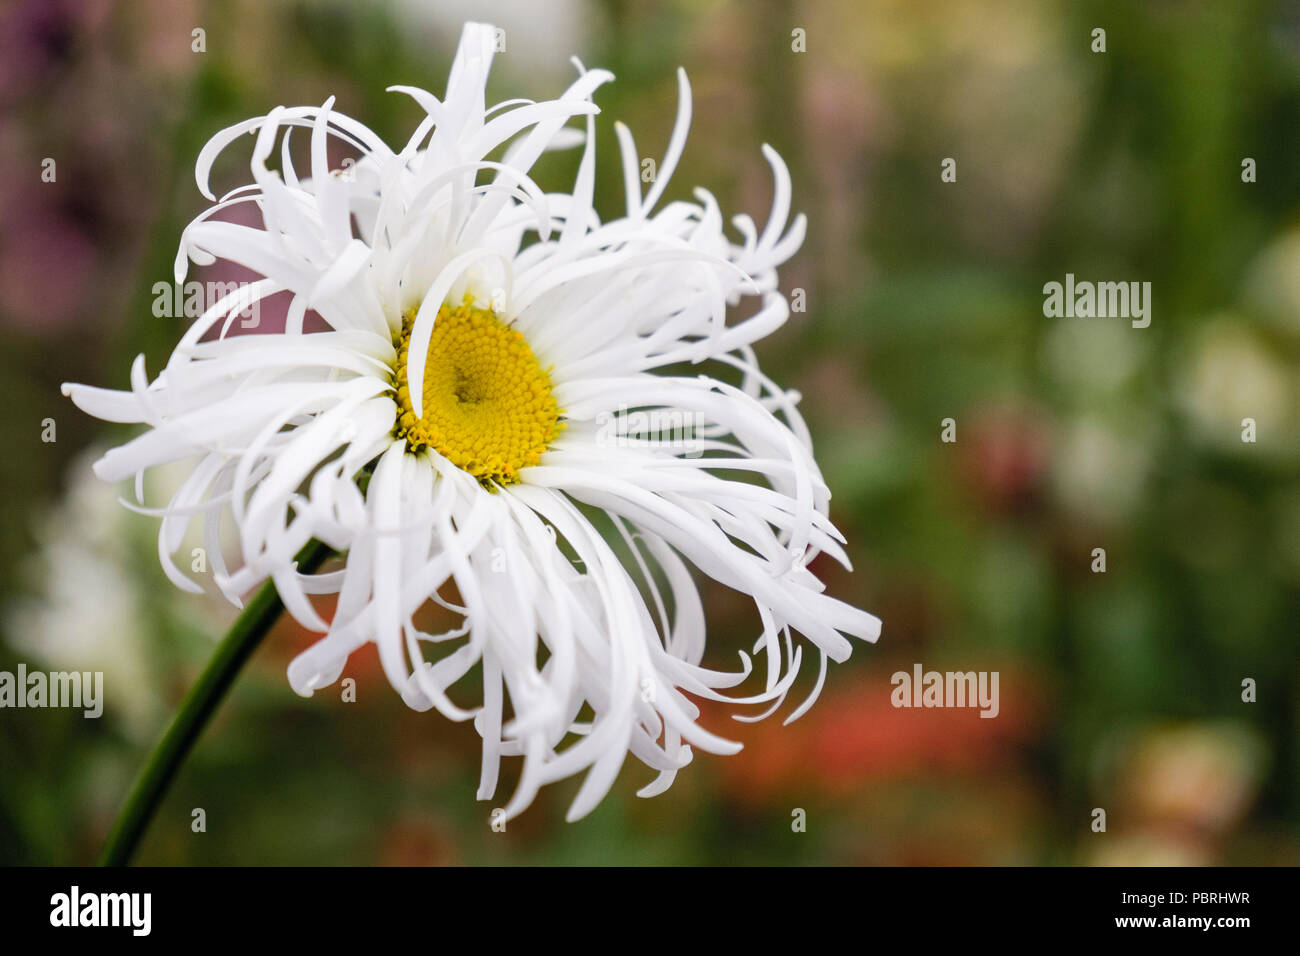 Single white flower of Leucanthemum x superbum 'bishopstone' focused against a background of blurred flowers. England UK Stock Photo